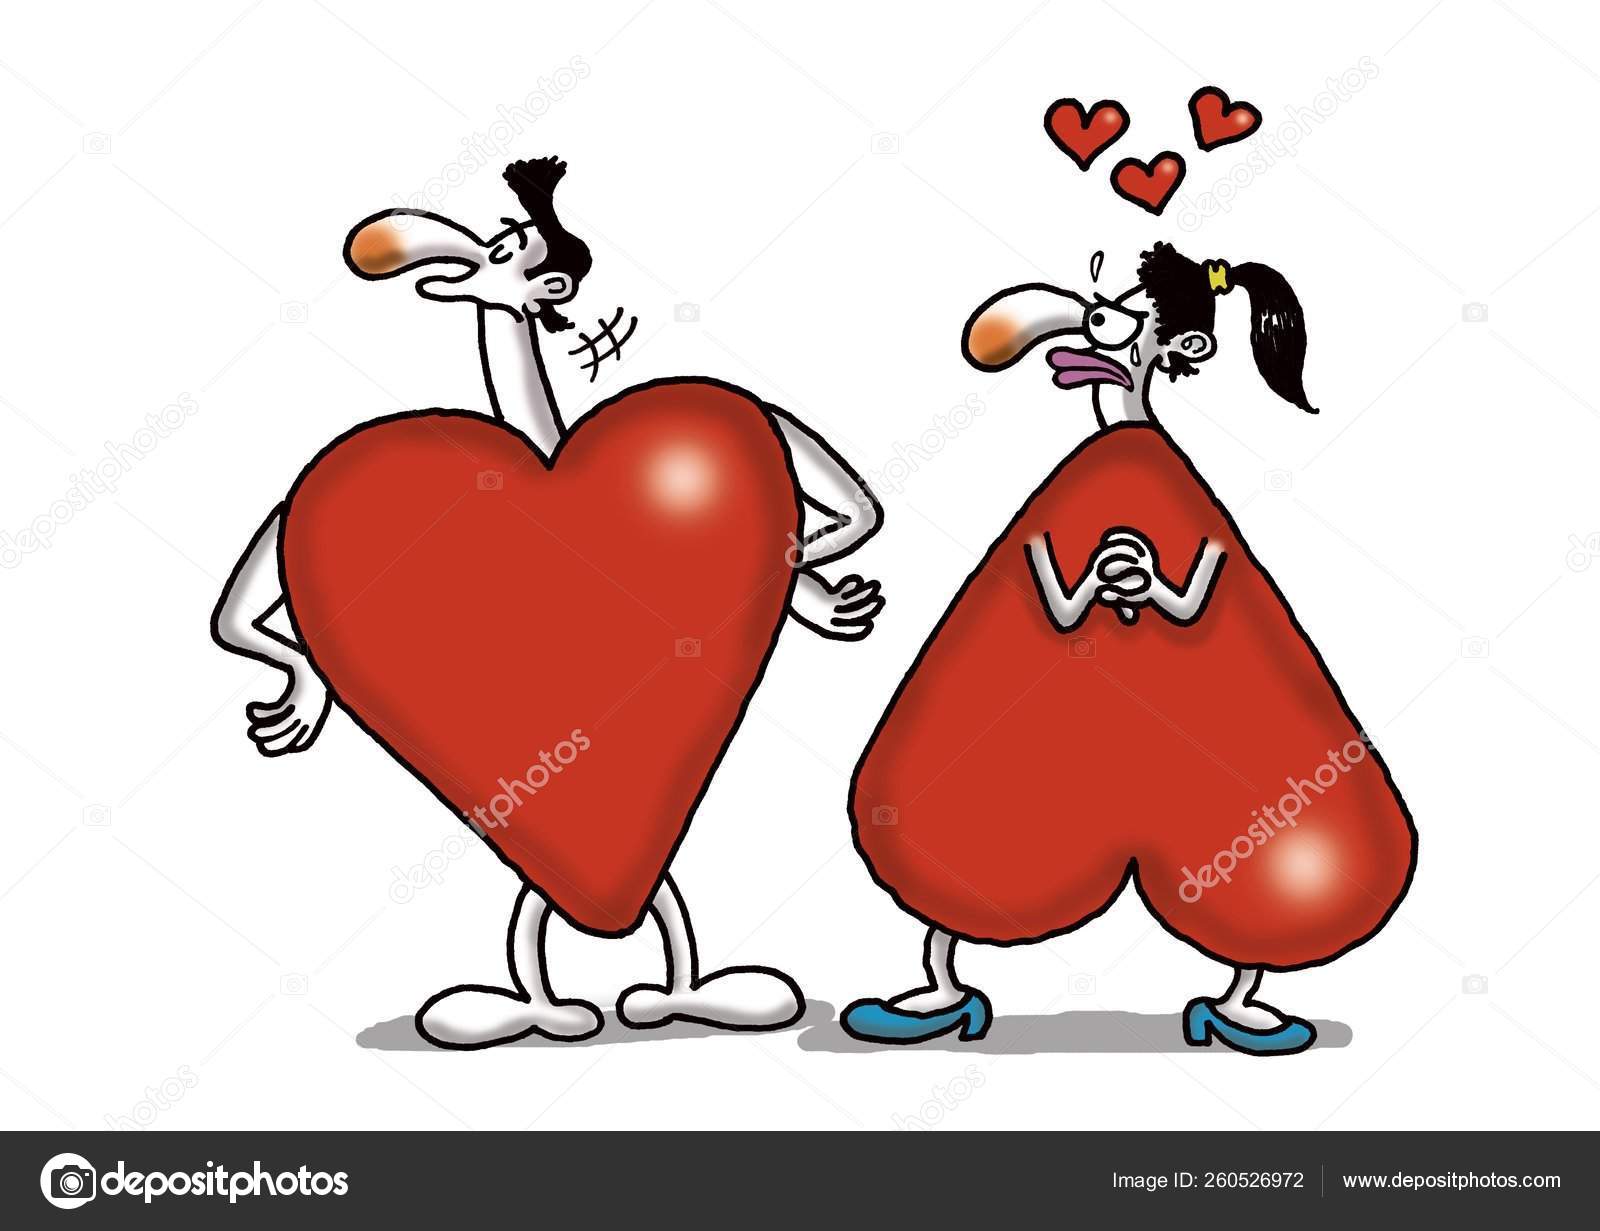 depositphotos_260526972-stock-photo-humorous-cartoon-valentine-day-love.jpg